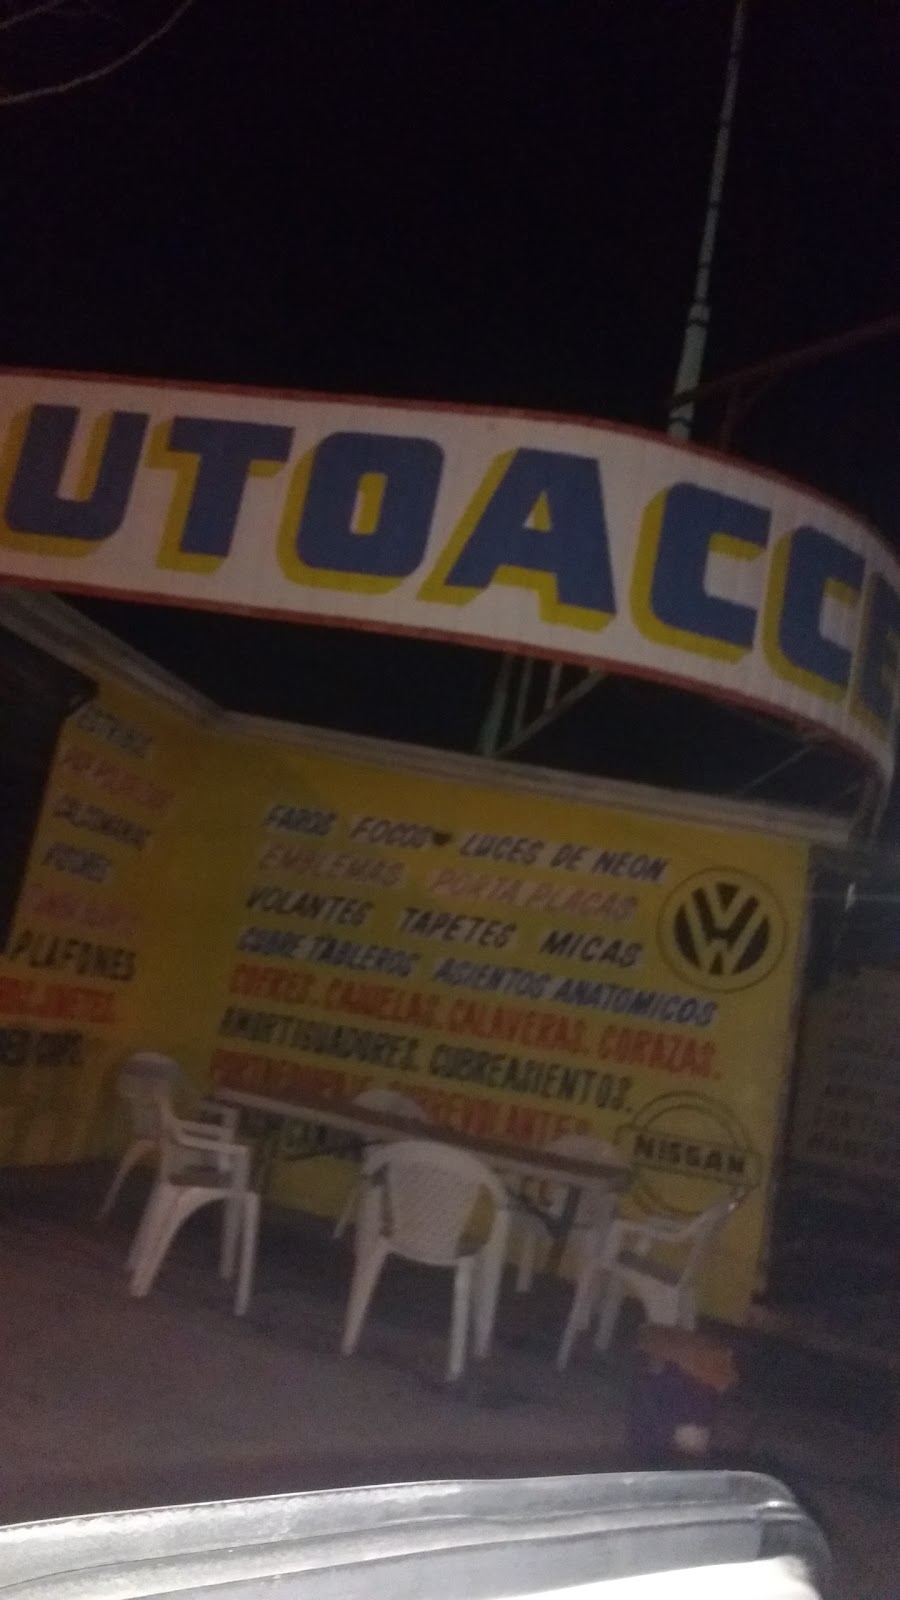 Auto Accesorios Chevys | Manuel J. Clouthier s/n, Del Real, Cd Juárez, Chih., Mexico | Phone: 656 170 5399